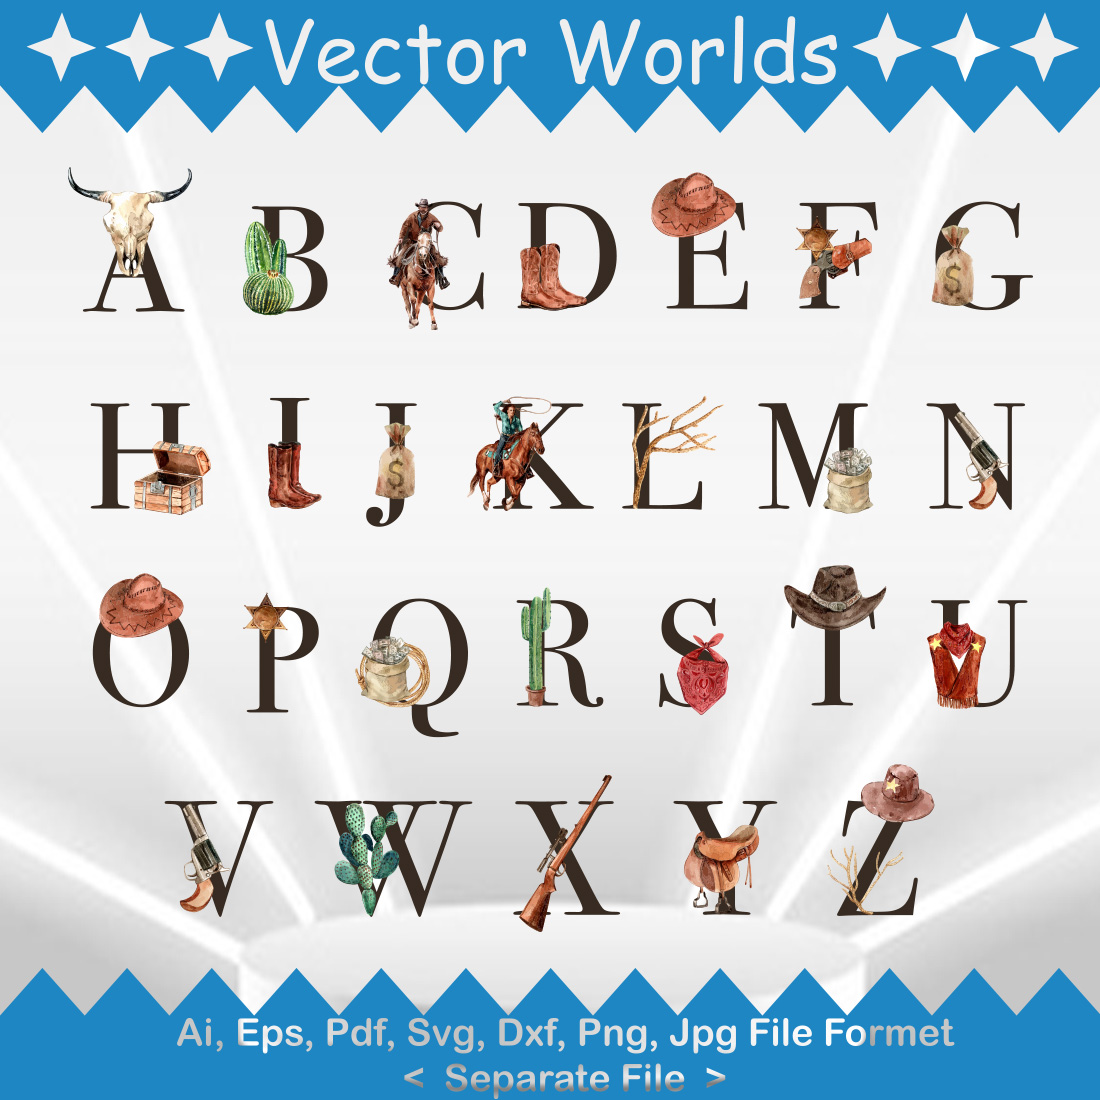 Cowboy Alphabet SVG Vector Design cover image.